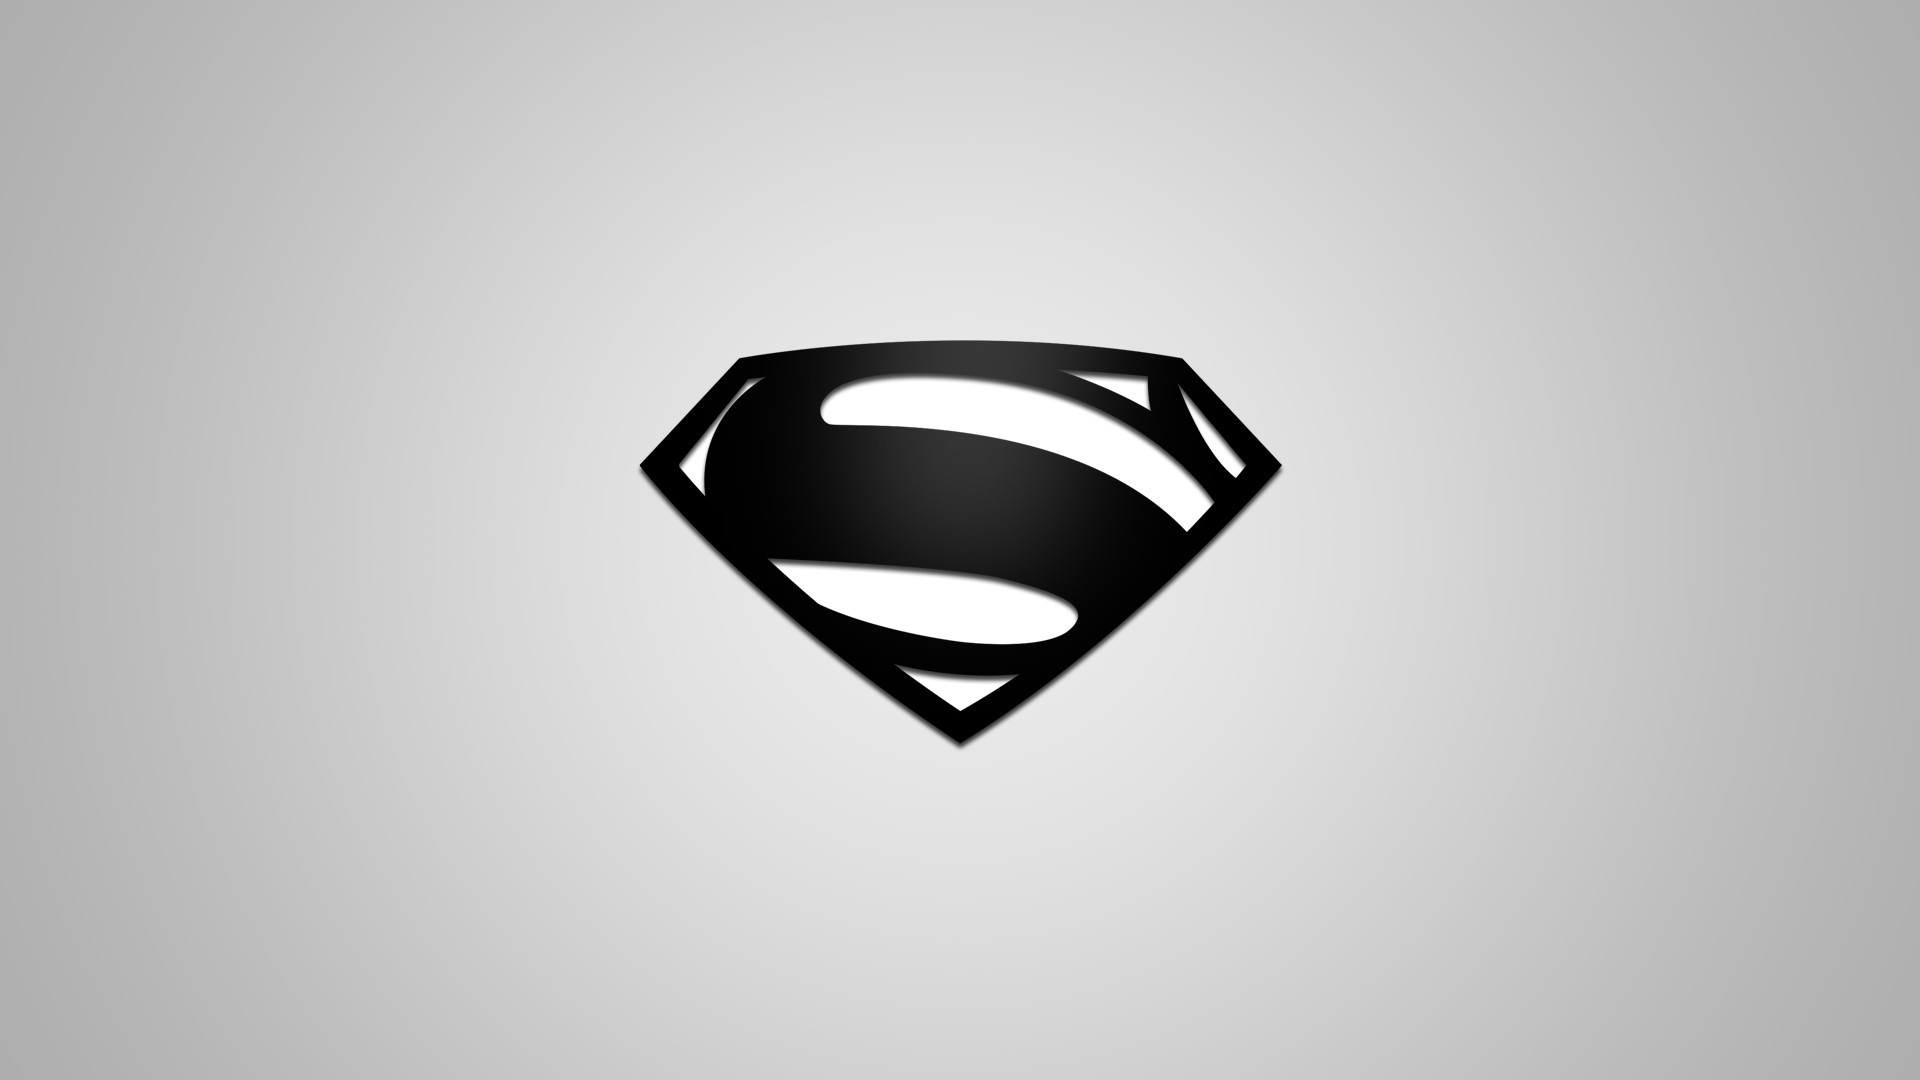 1920x1080 Title : superman logo hd wallpapers 1080p (60+ images) Dimension : 1920 x  1080. File Type : JPG/JPEG